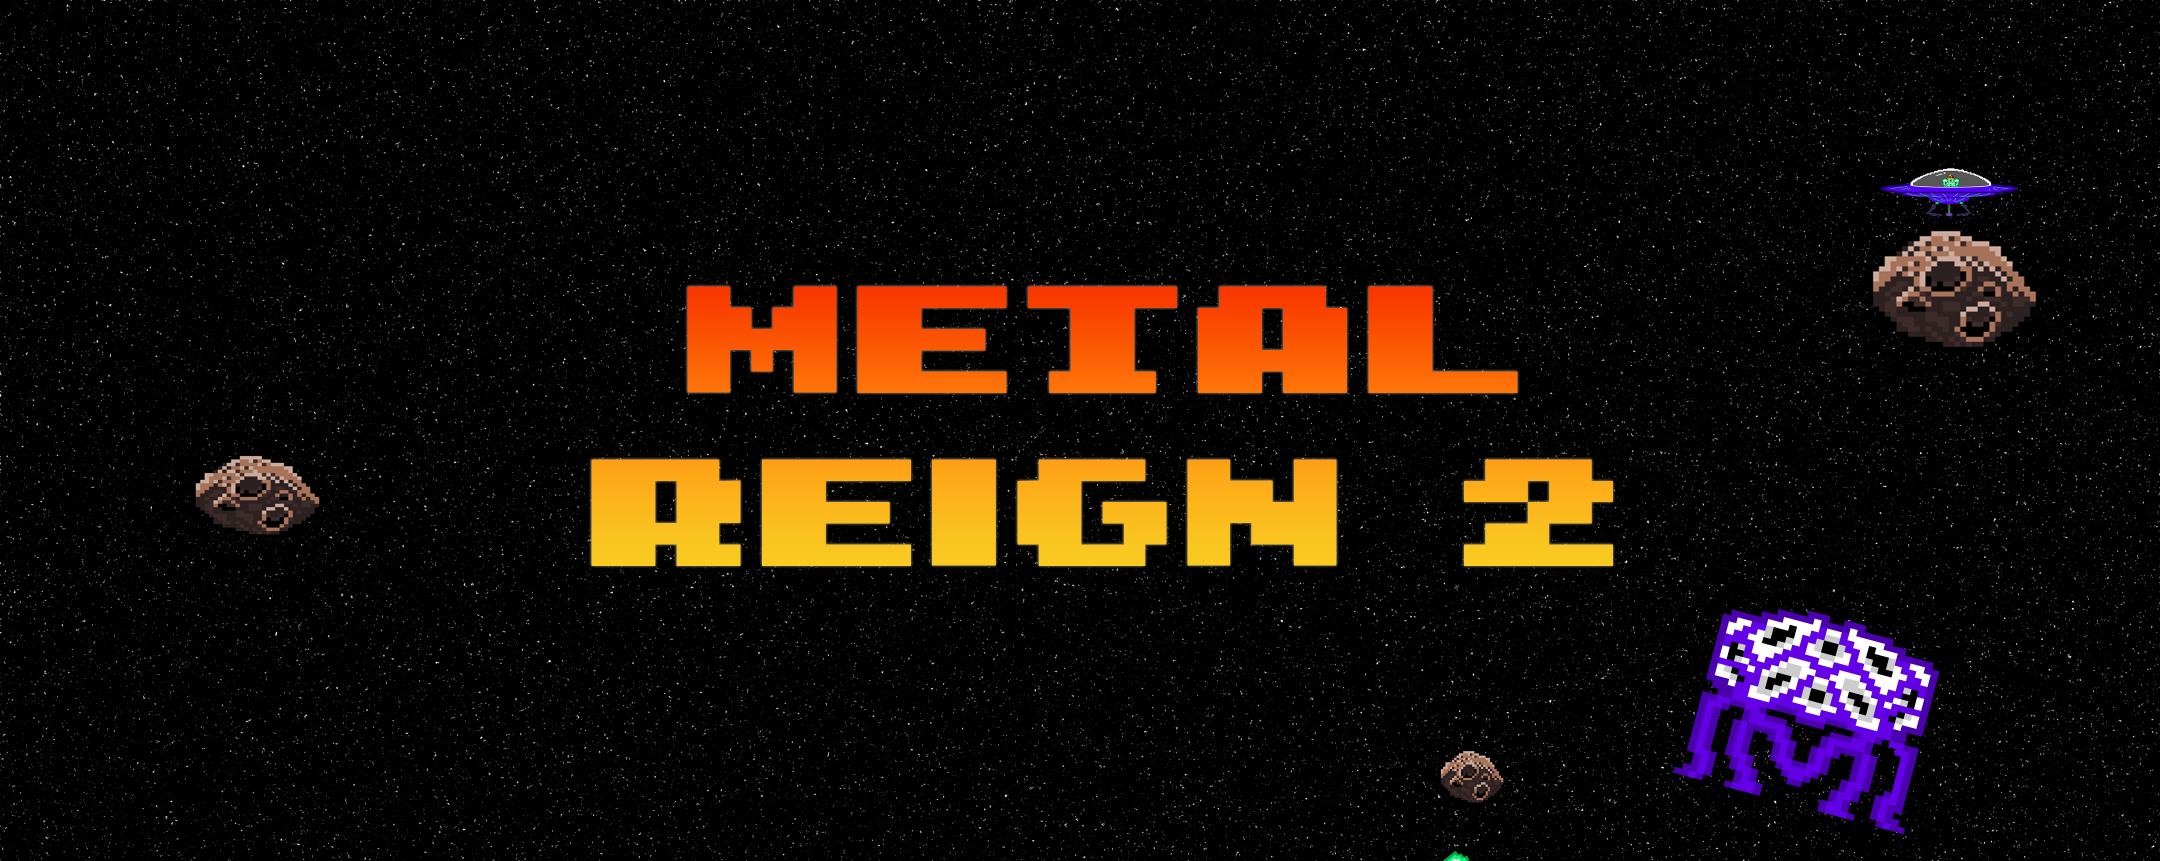 Metal Reign 2